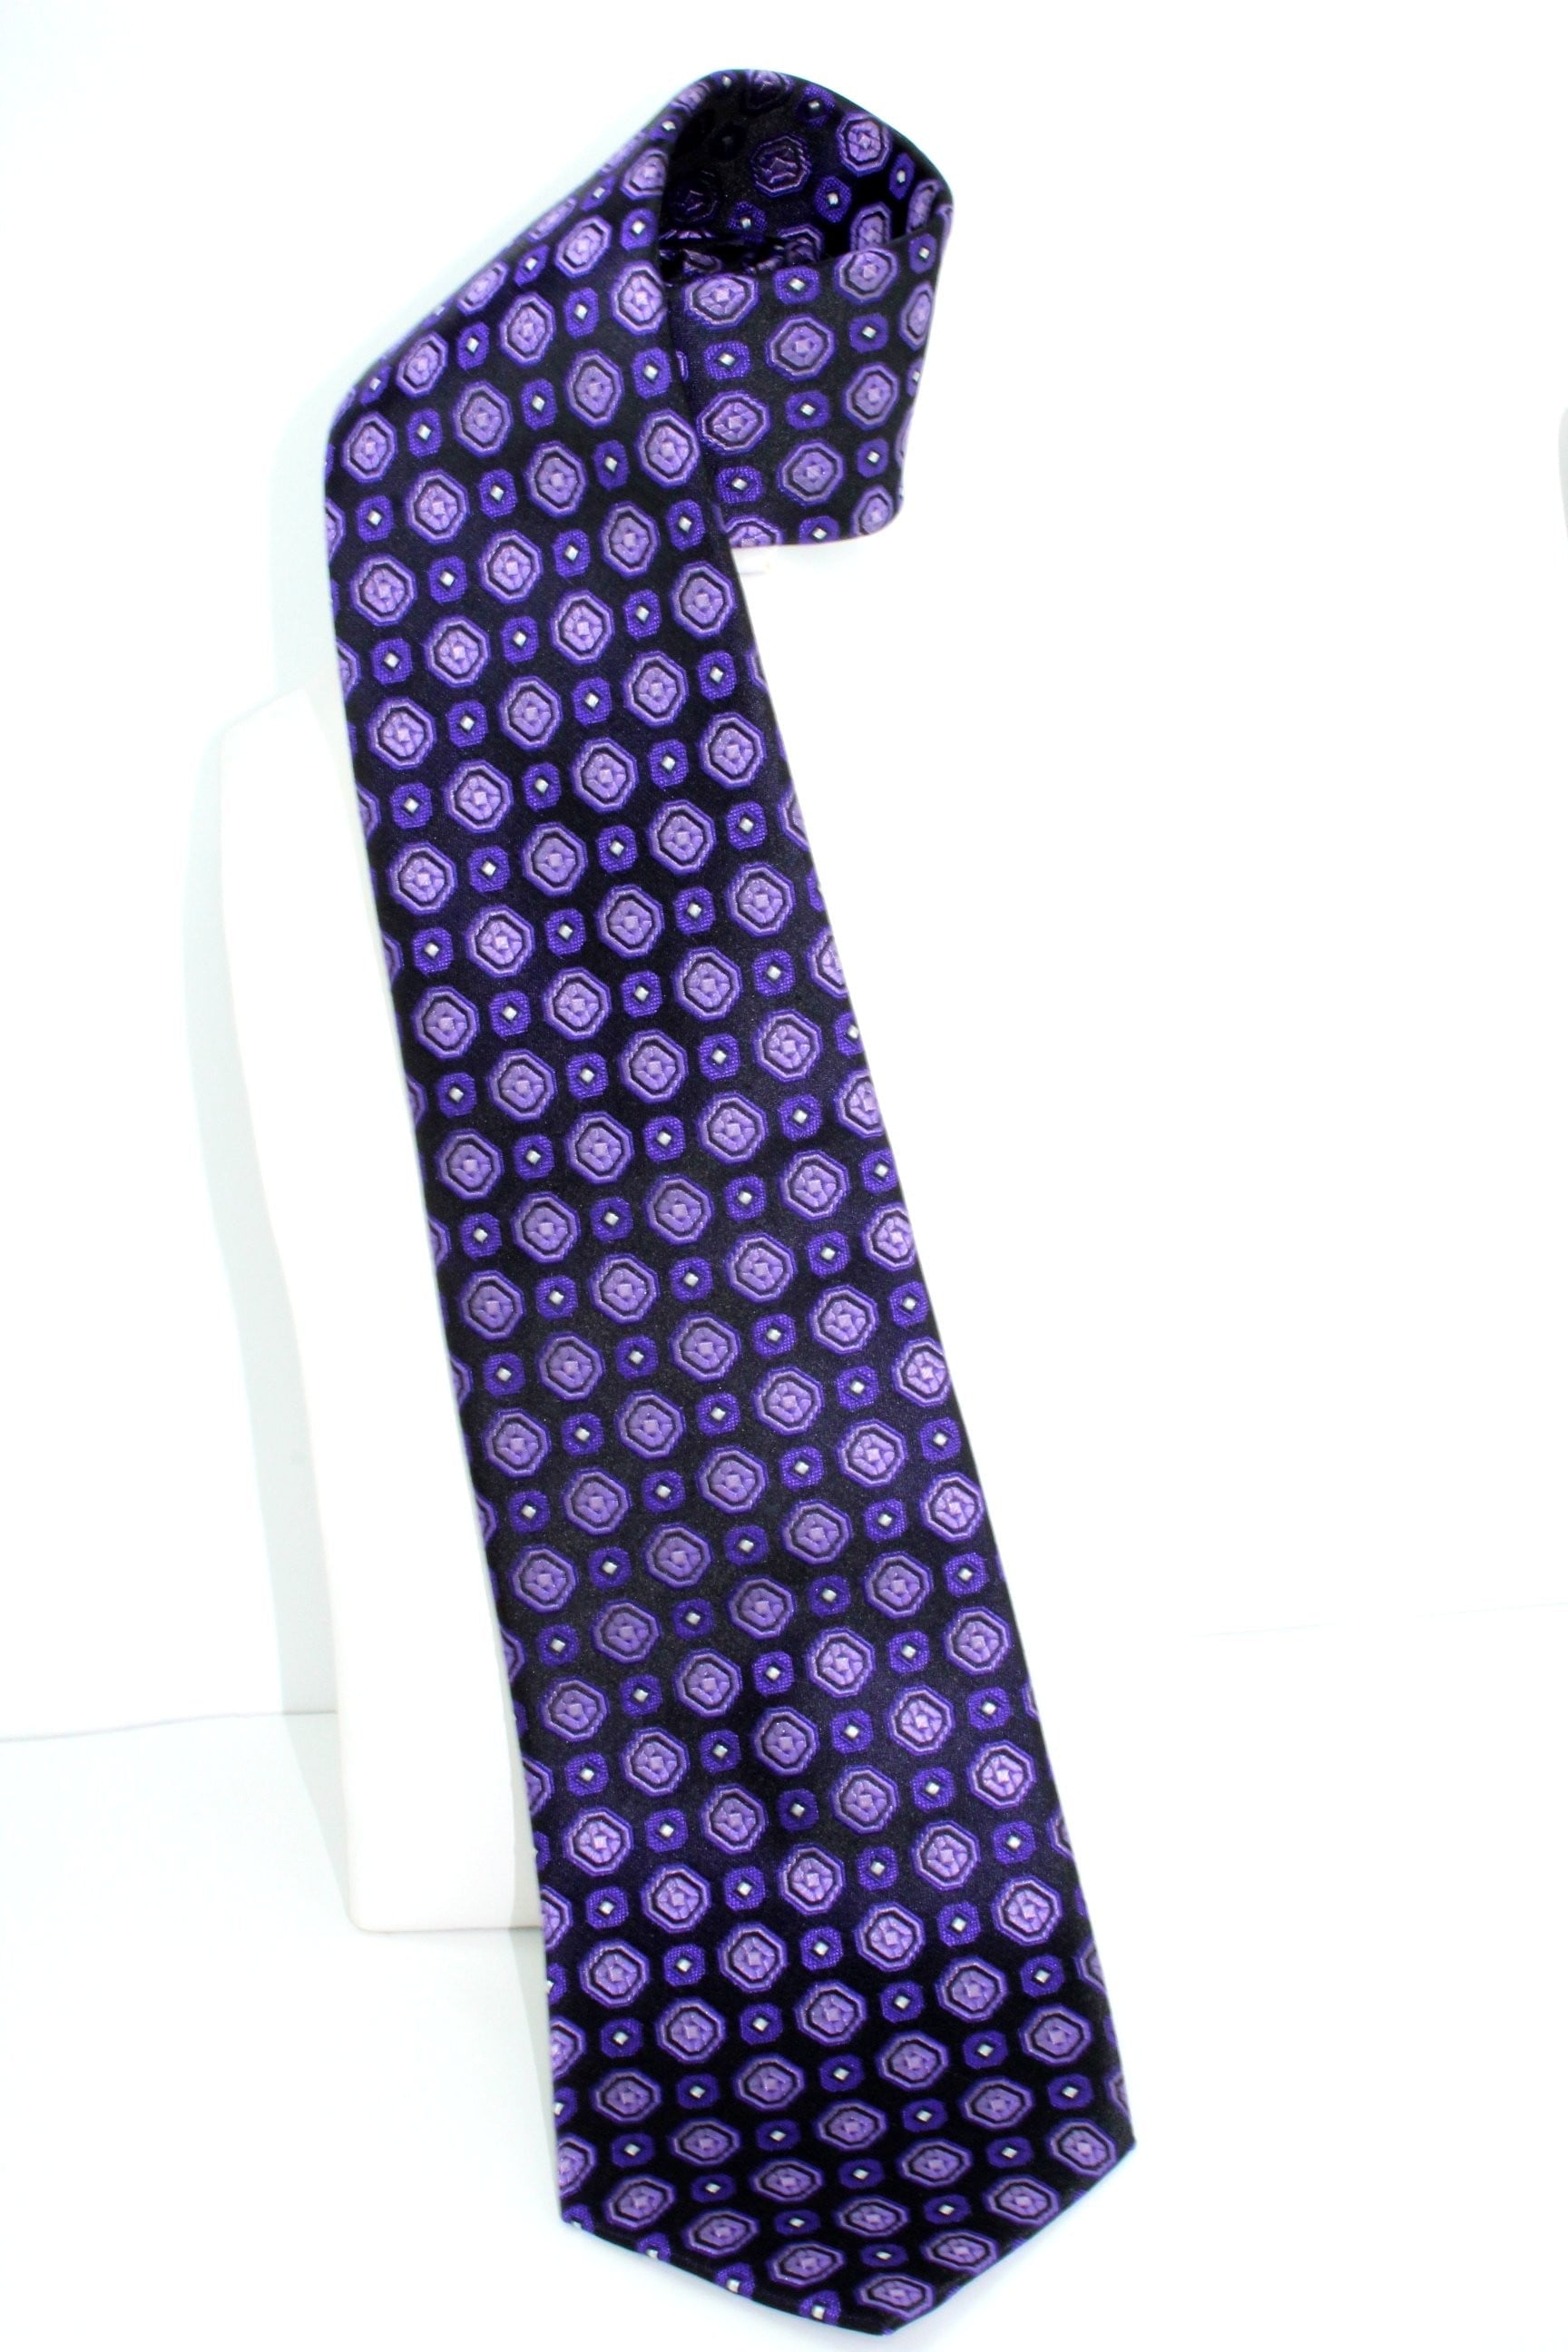 Geoffrey Beene NY 2 Silk Ties - Purple Occtagon Design Black White Geometric small purple shades design